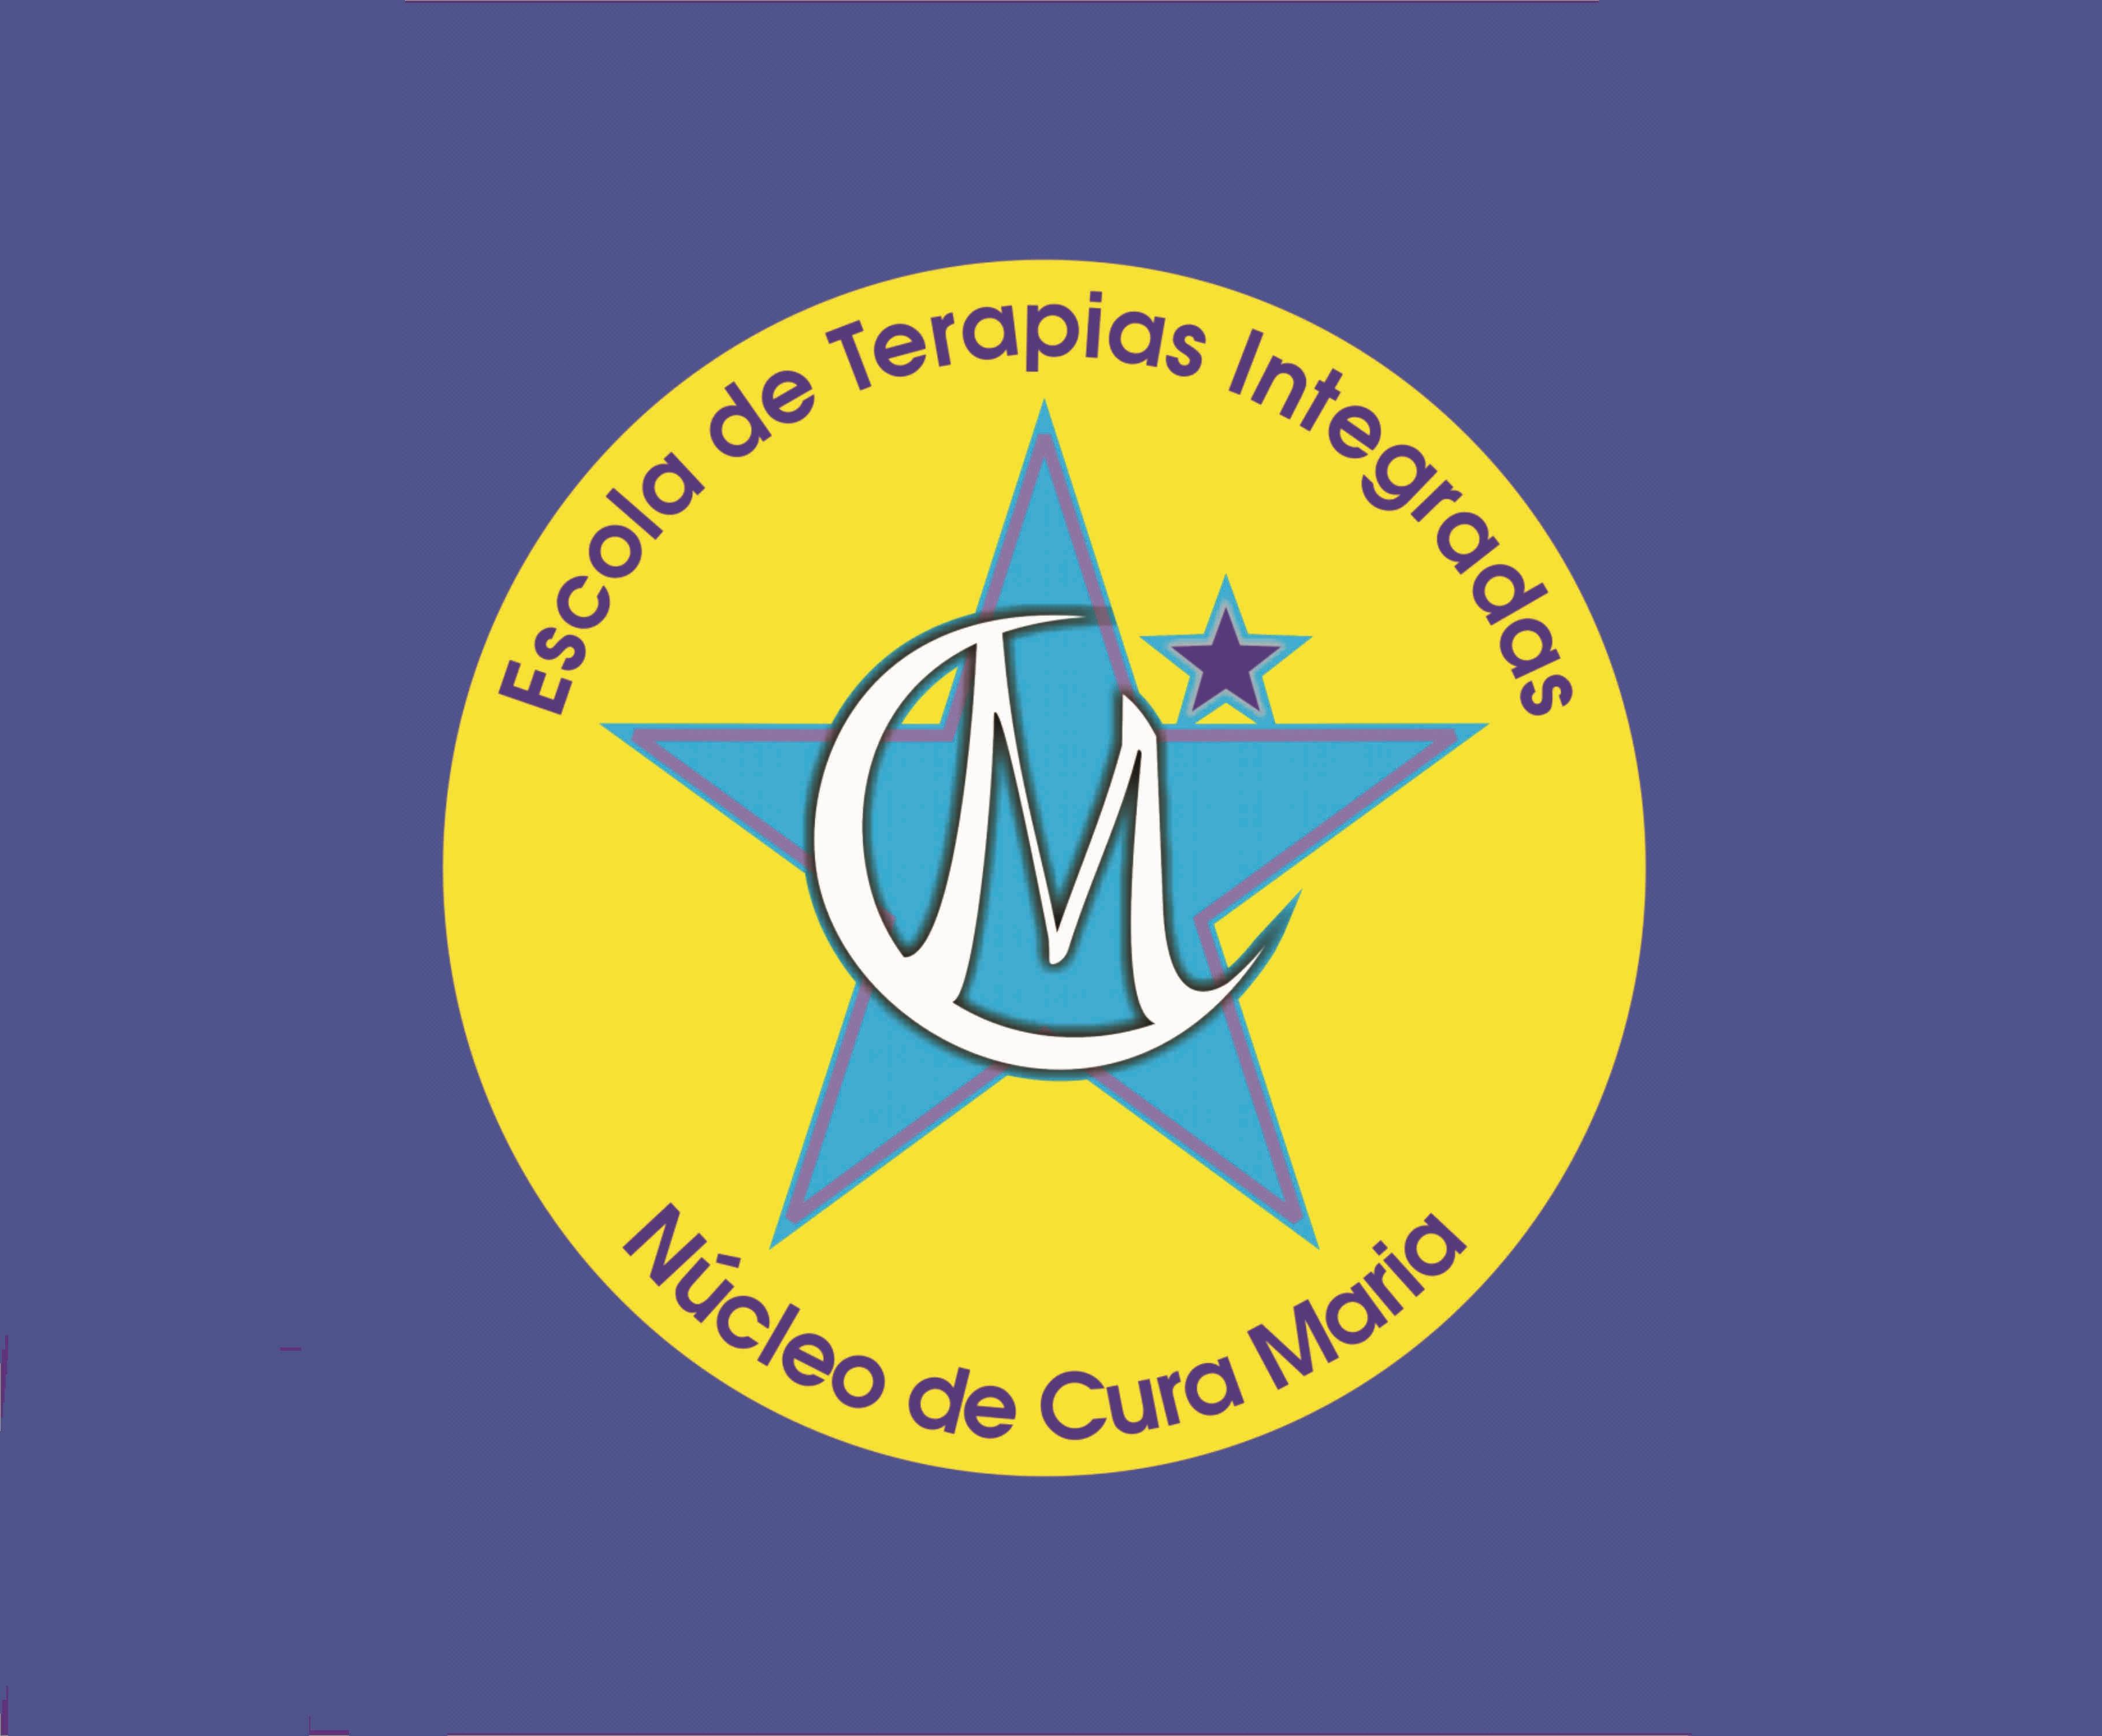 Escola de Terapias Integradas Núcleo de Cura Maria logo